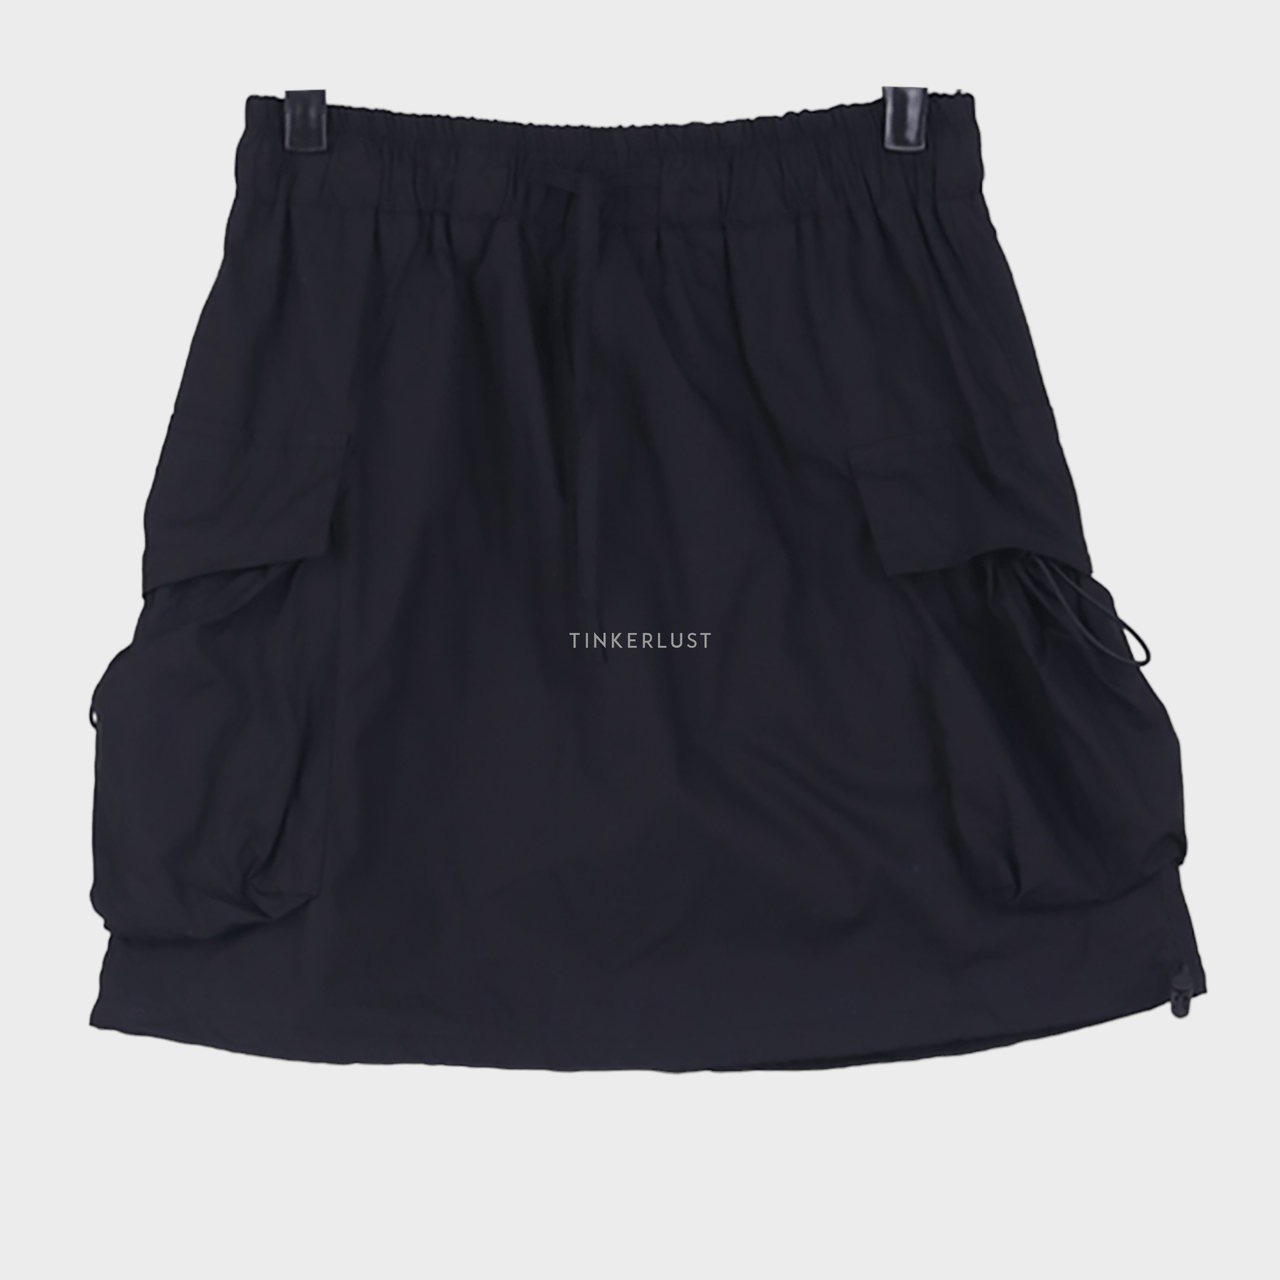 Private Collection Black Skort Pants